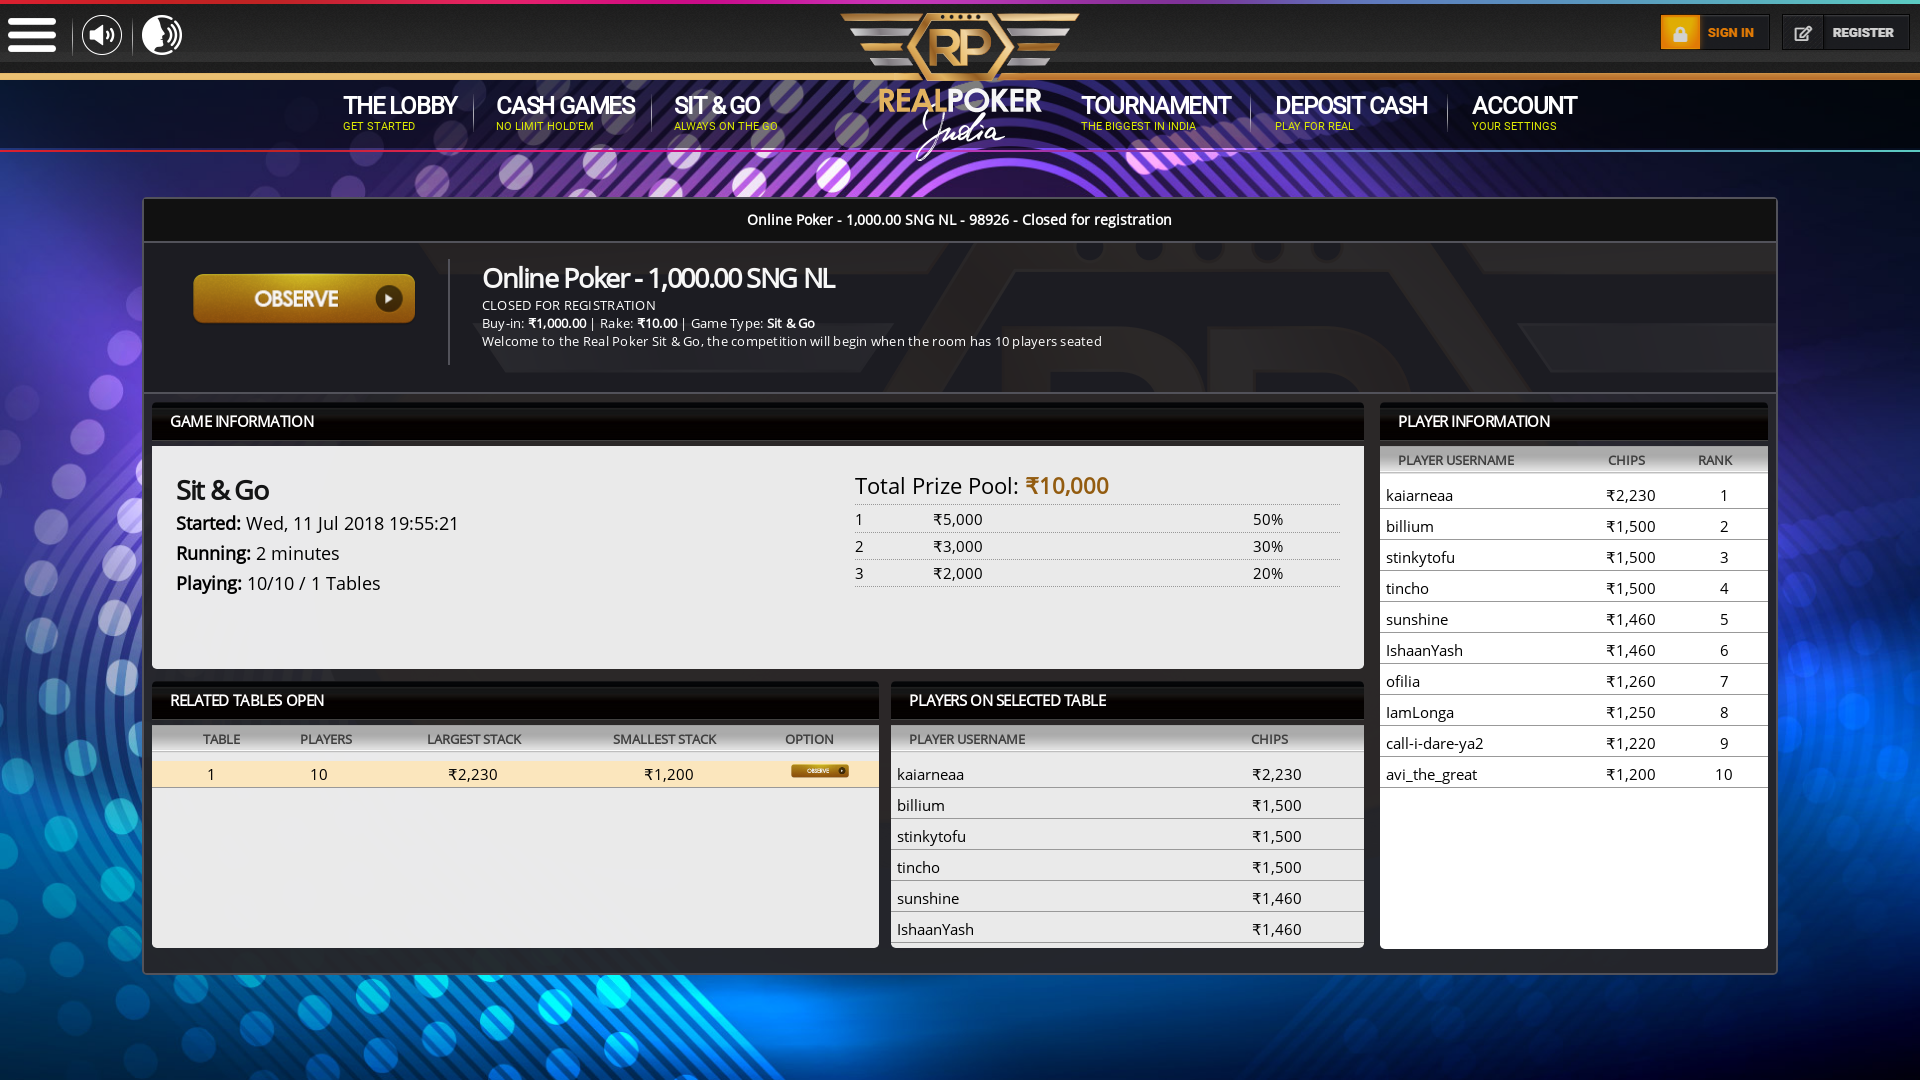 Allahabad online poker